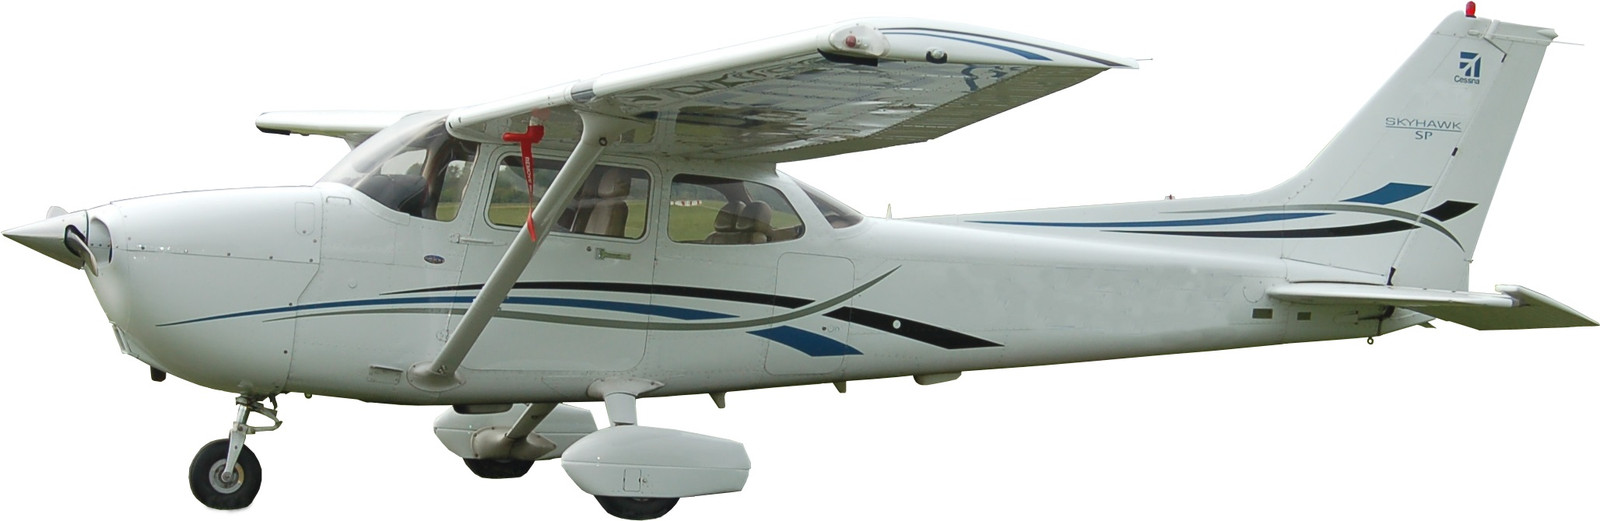 Cessna-182 самолет на белом фоне